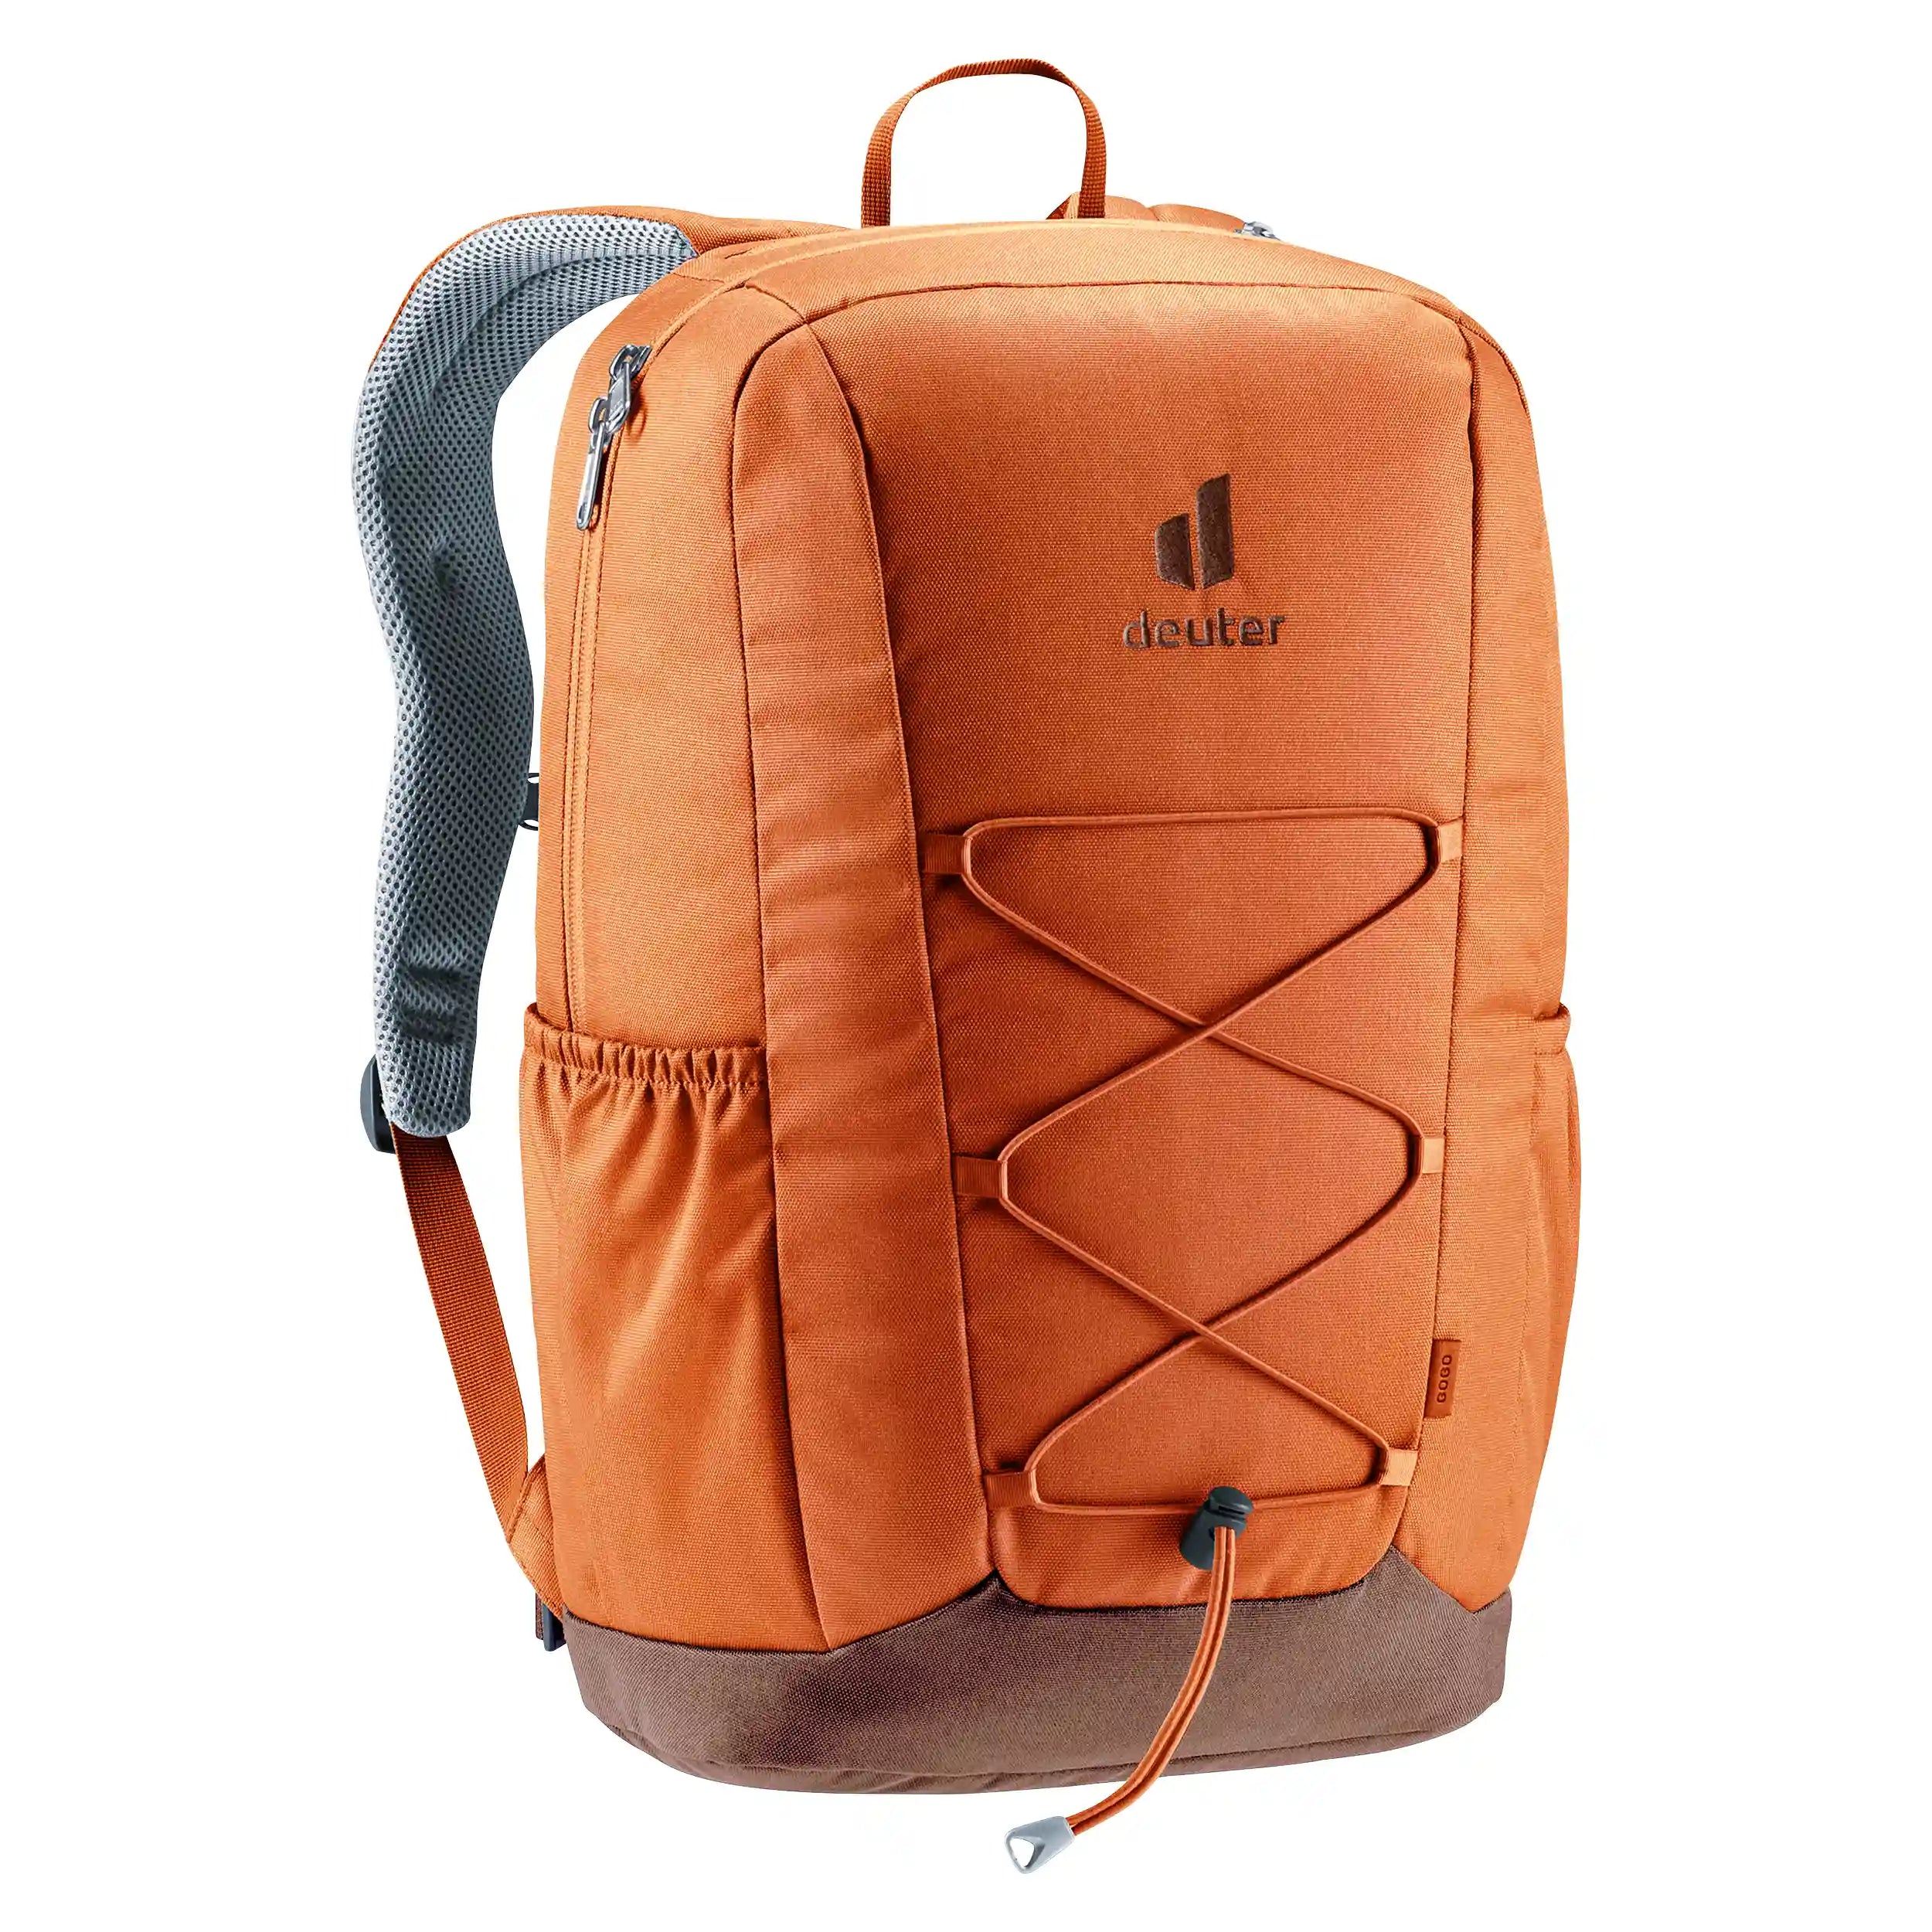 Deuter Gogo Lifestyle Backpack 46 cm - Chestnut Umber